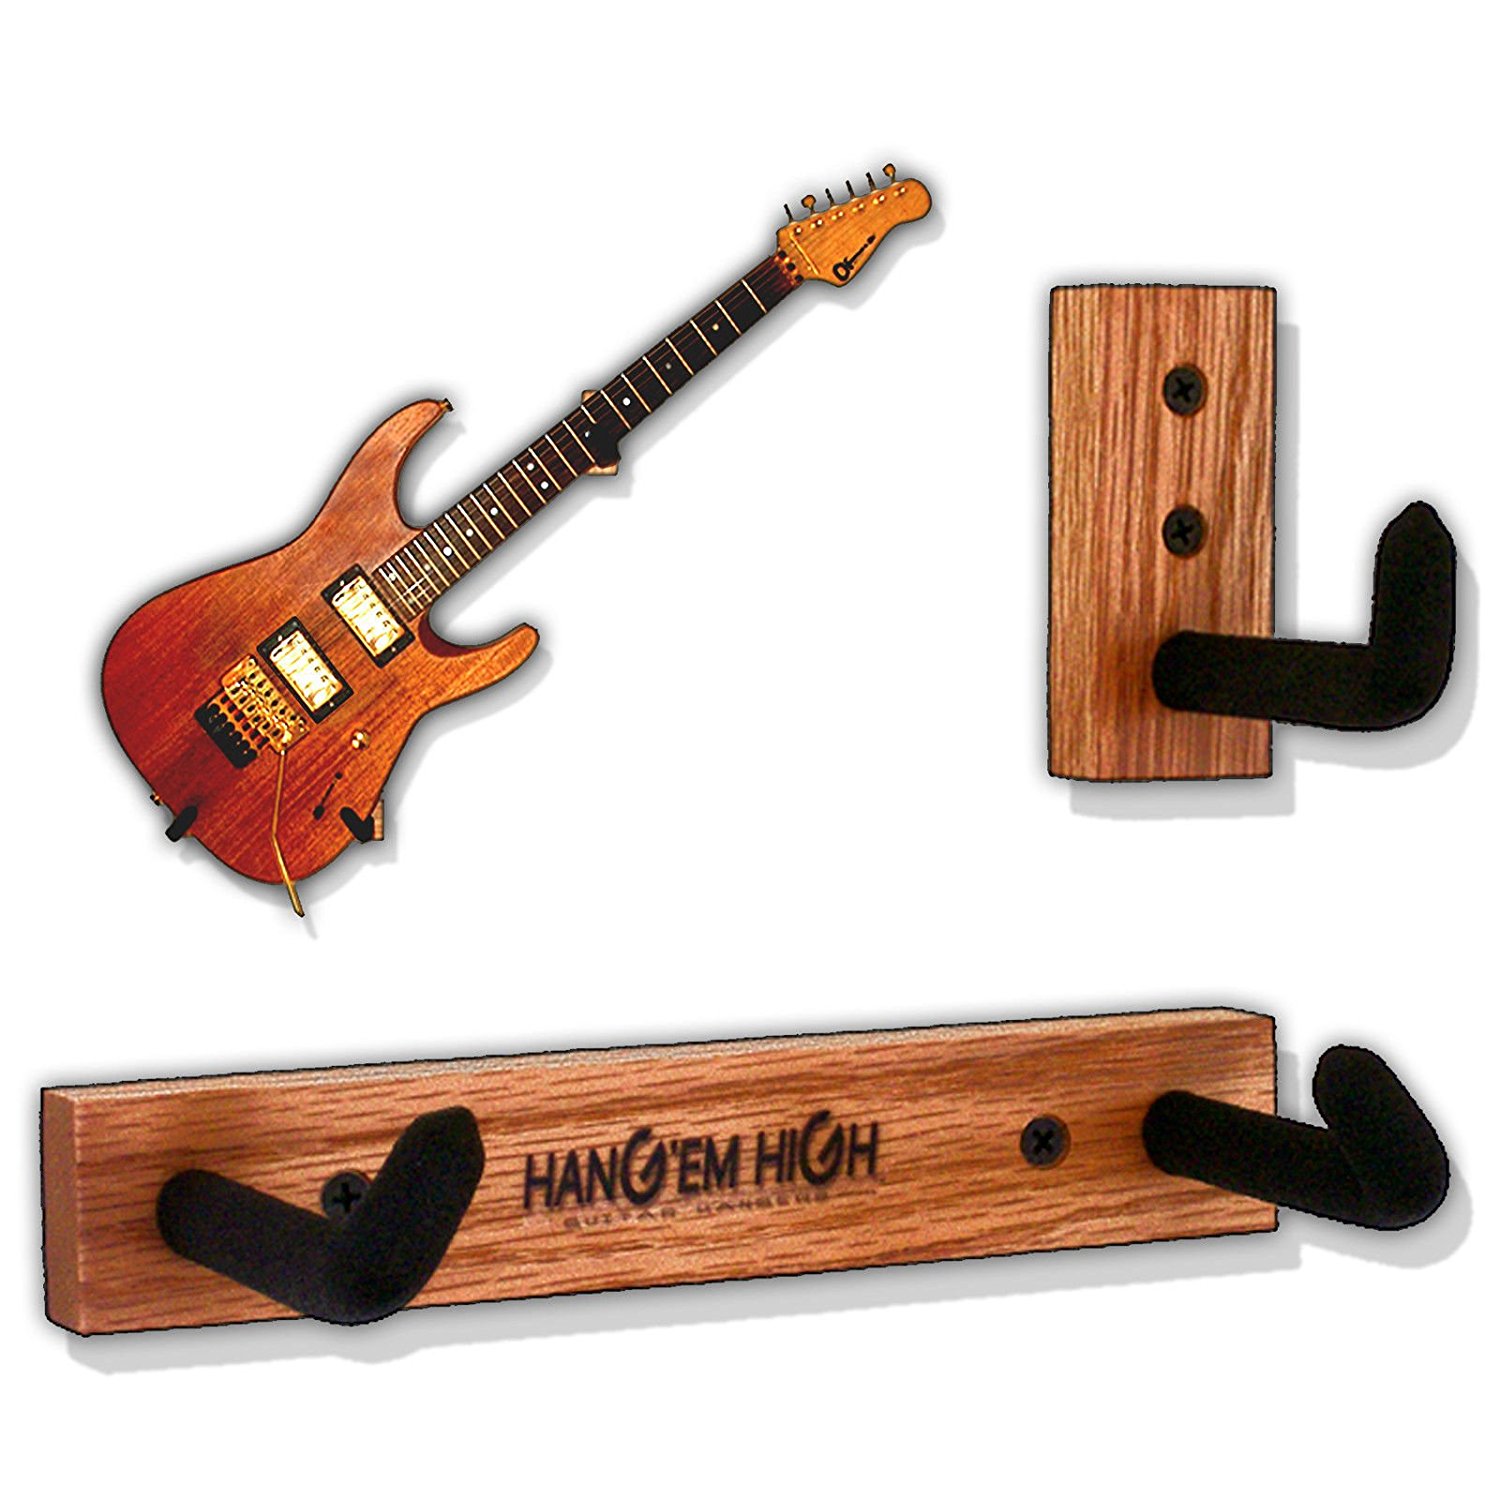 Buy adjustable two-piece wall guitar hanger